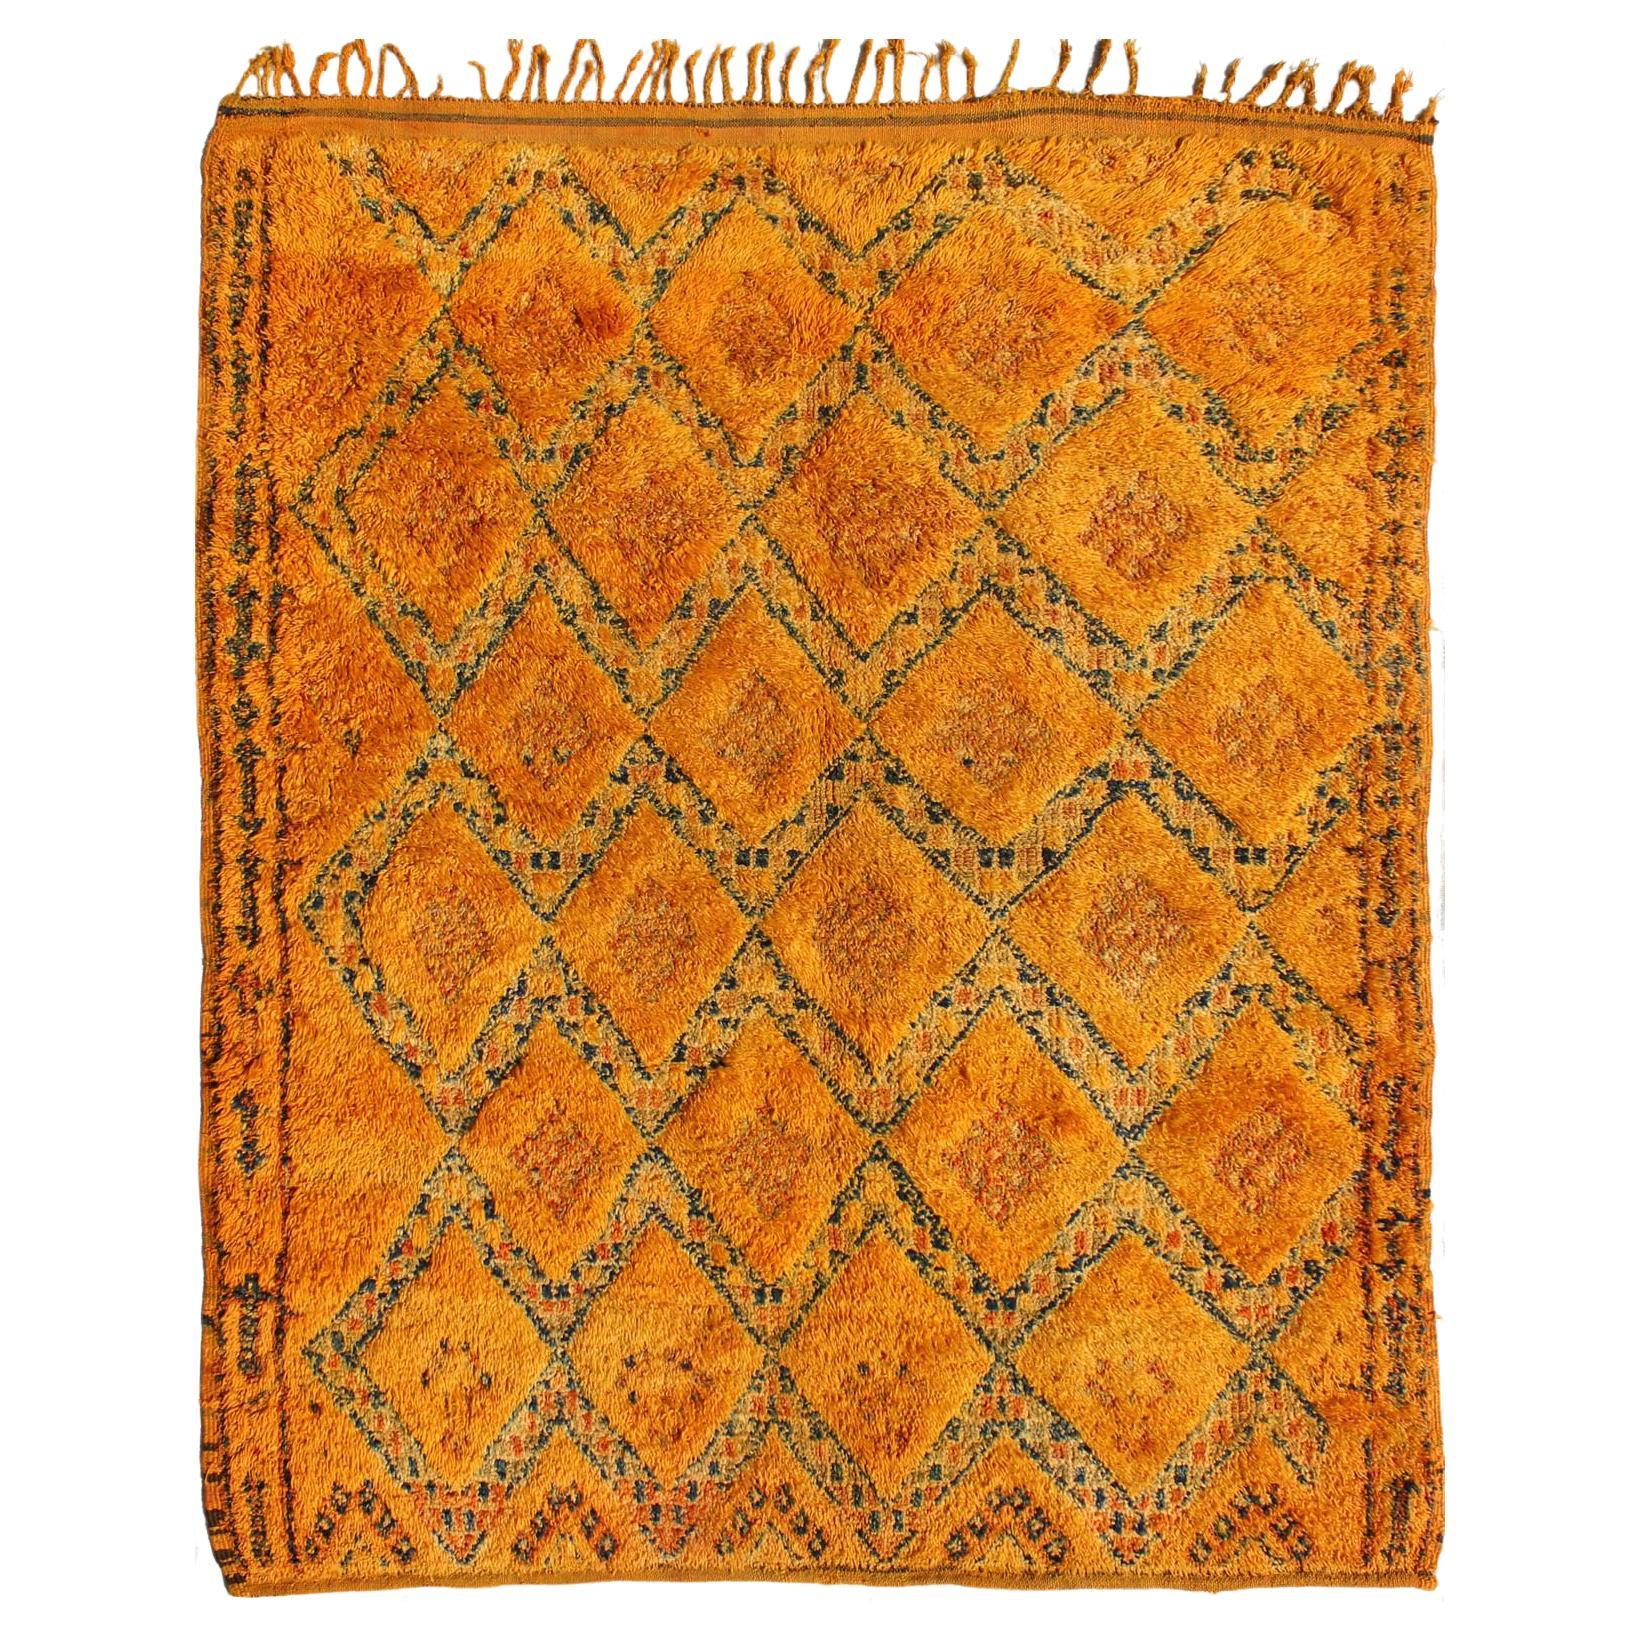 Saffron Colored Antique Moroccan Carpet with Geometric and Diamond Pattern